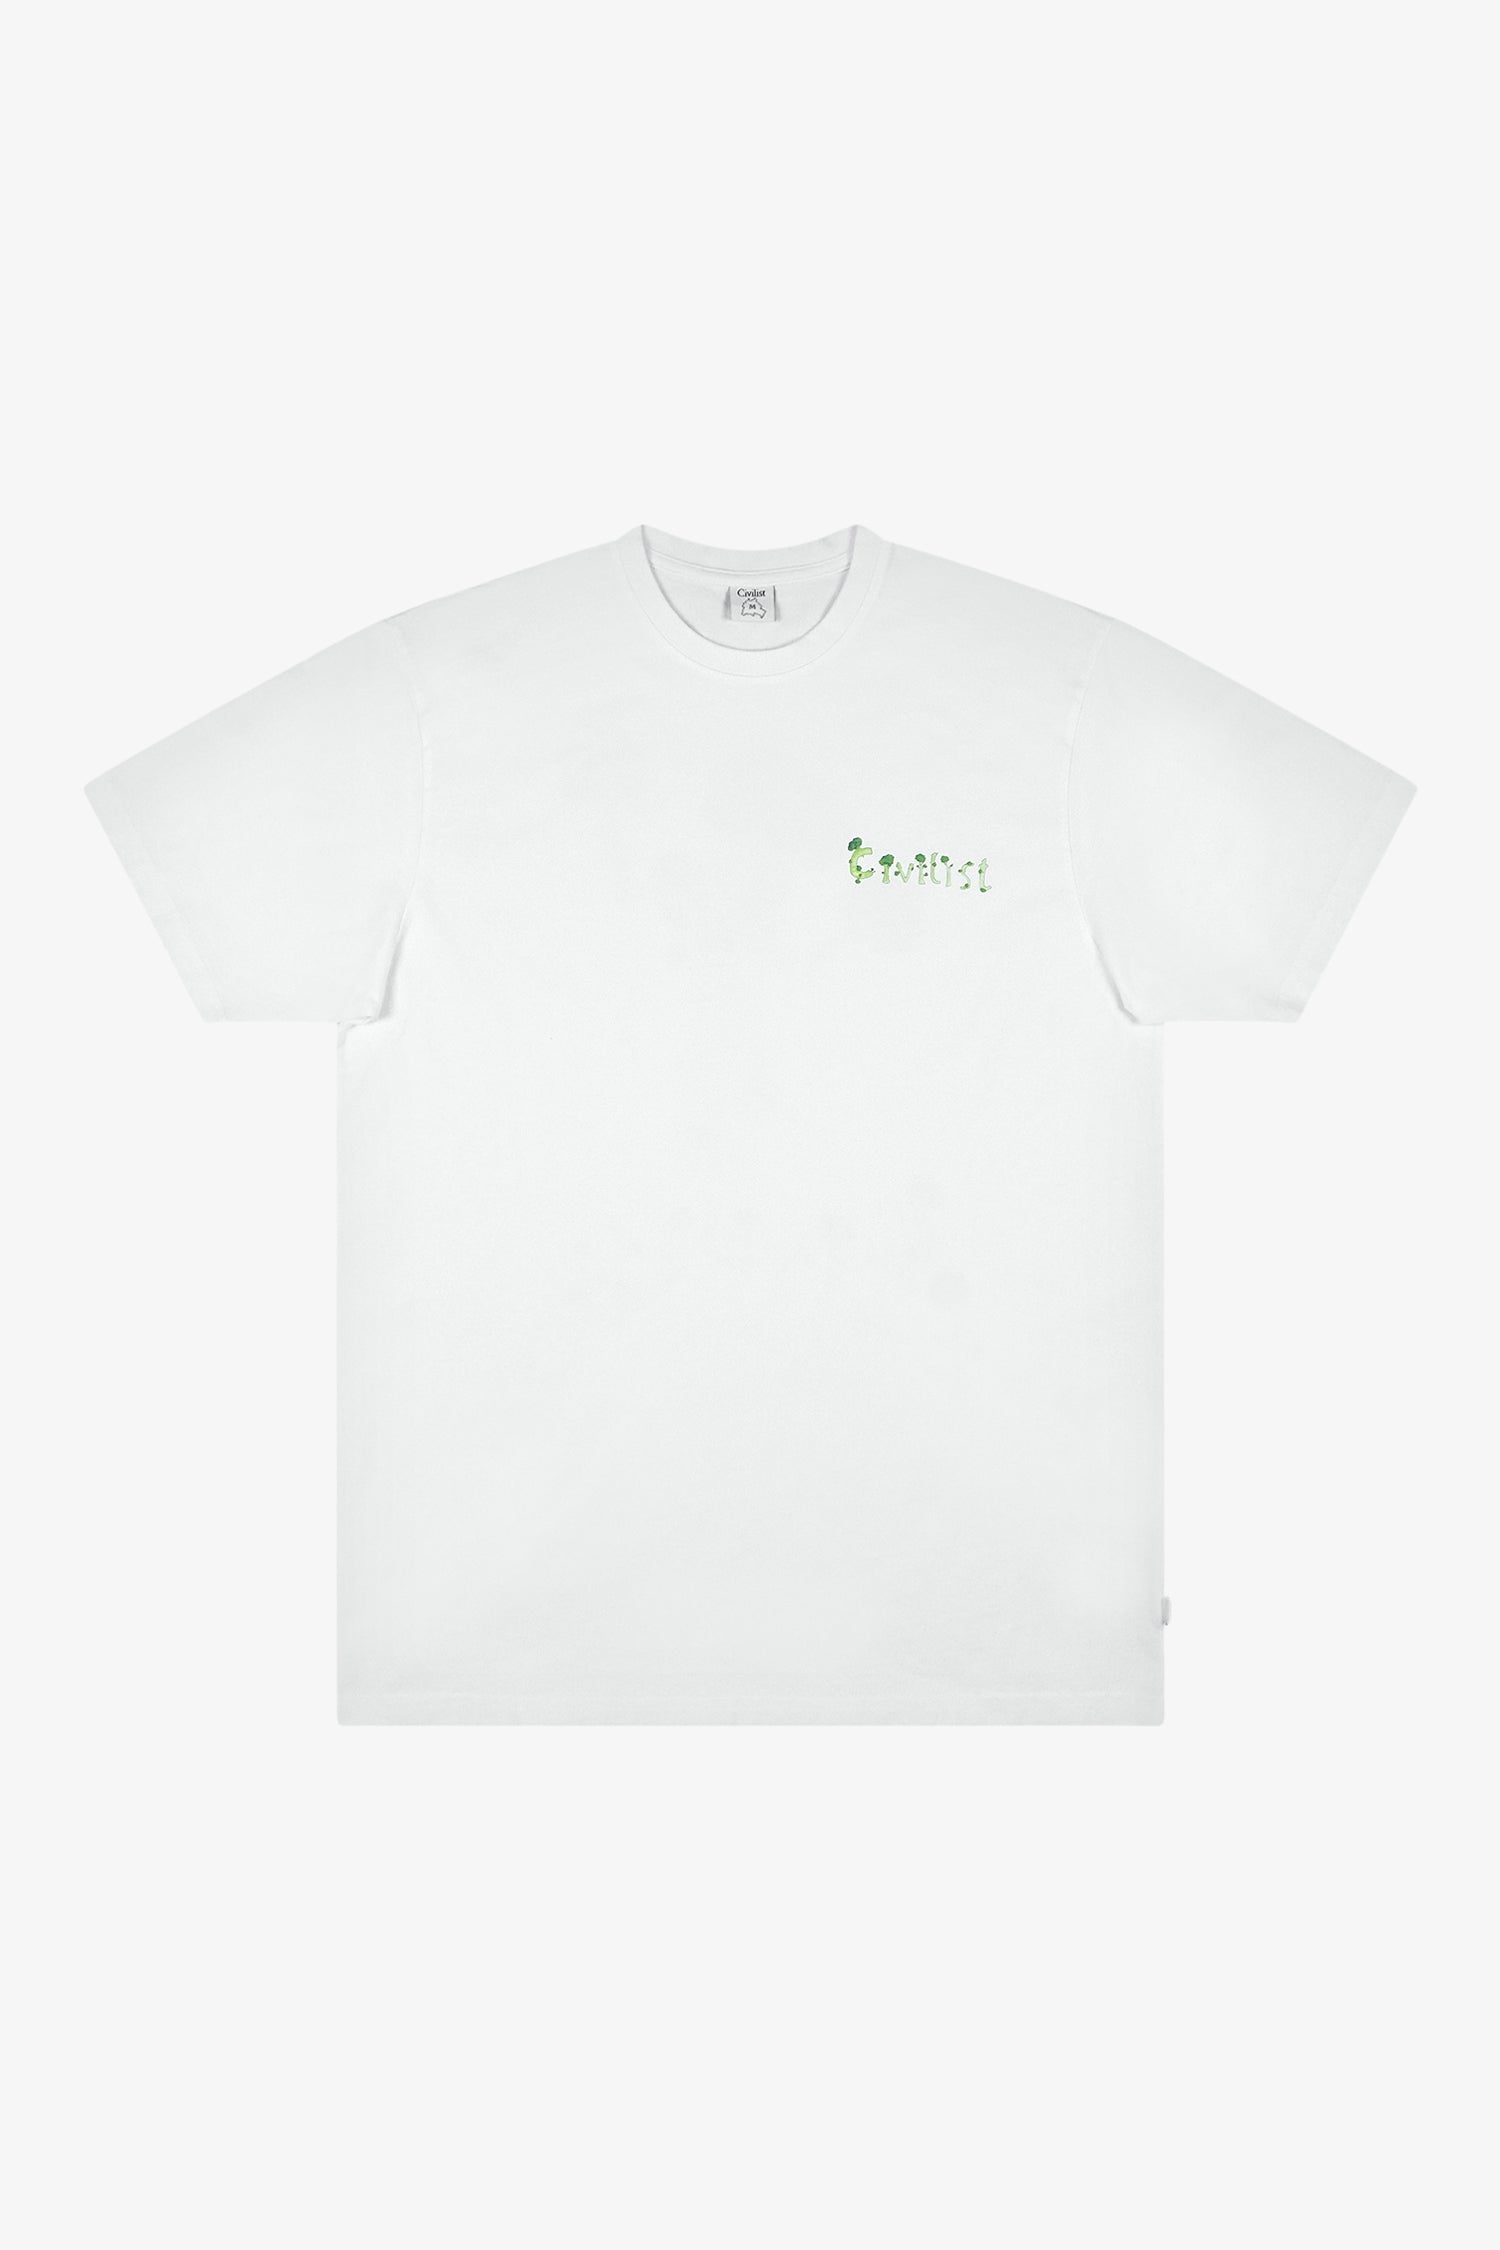 Selectshop FRAME - CIVILIST Broccoli Tee T-Shirts Dubai